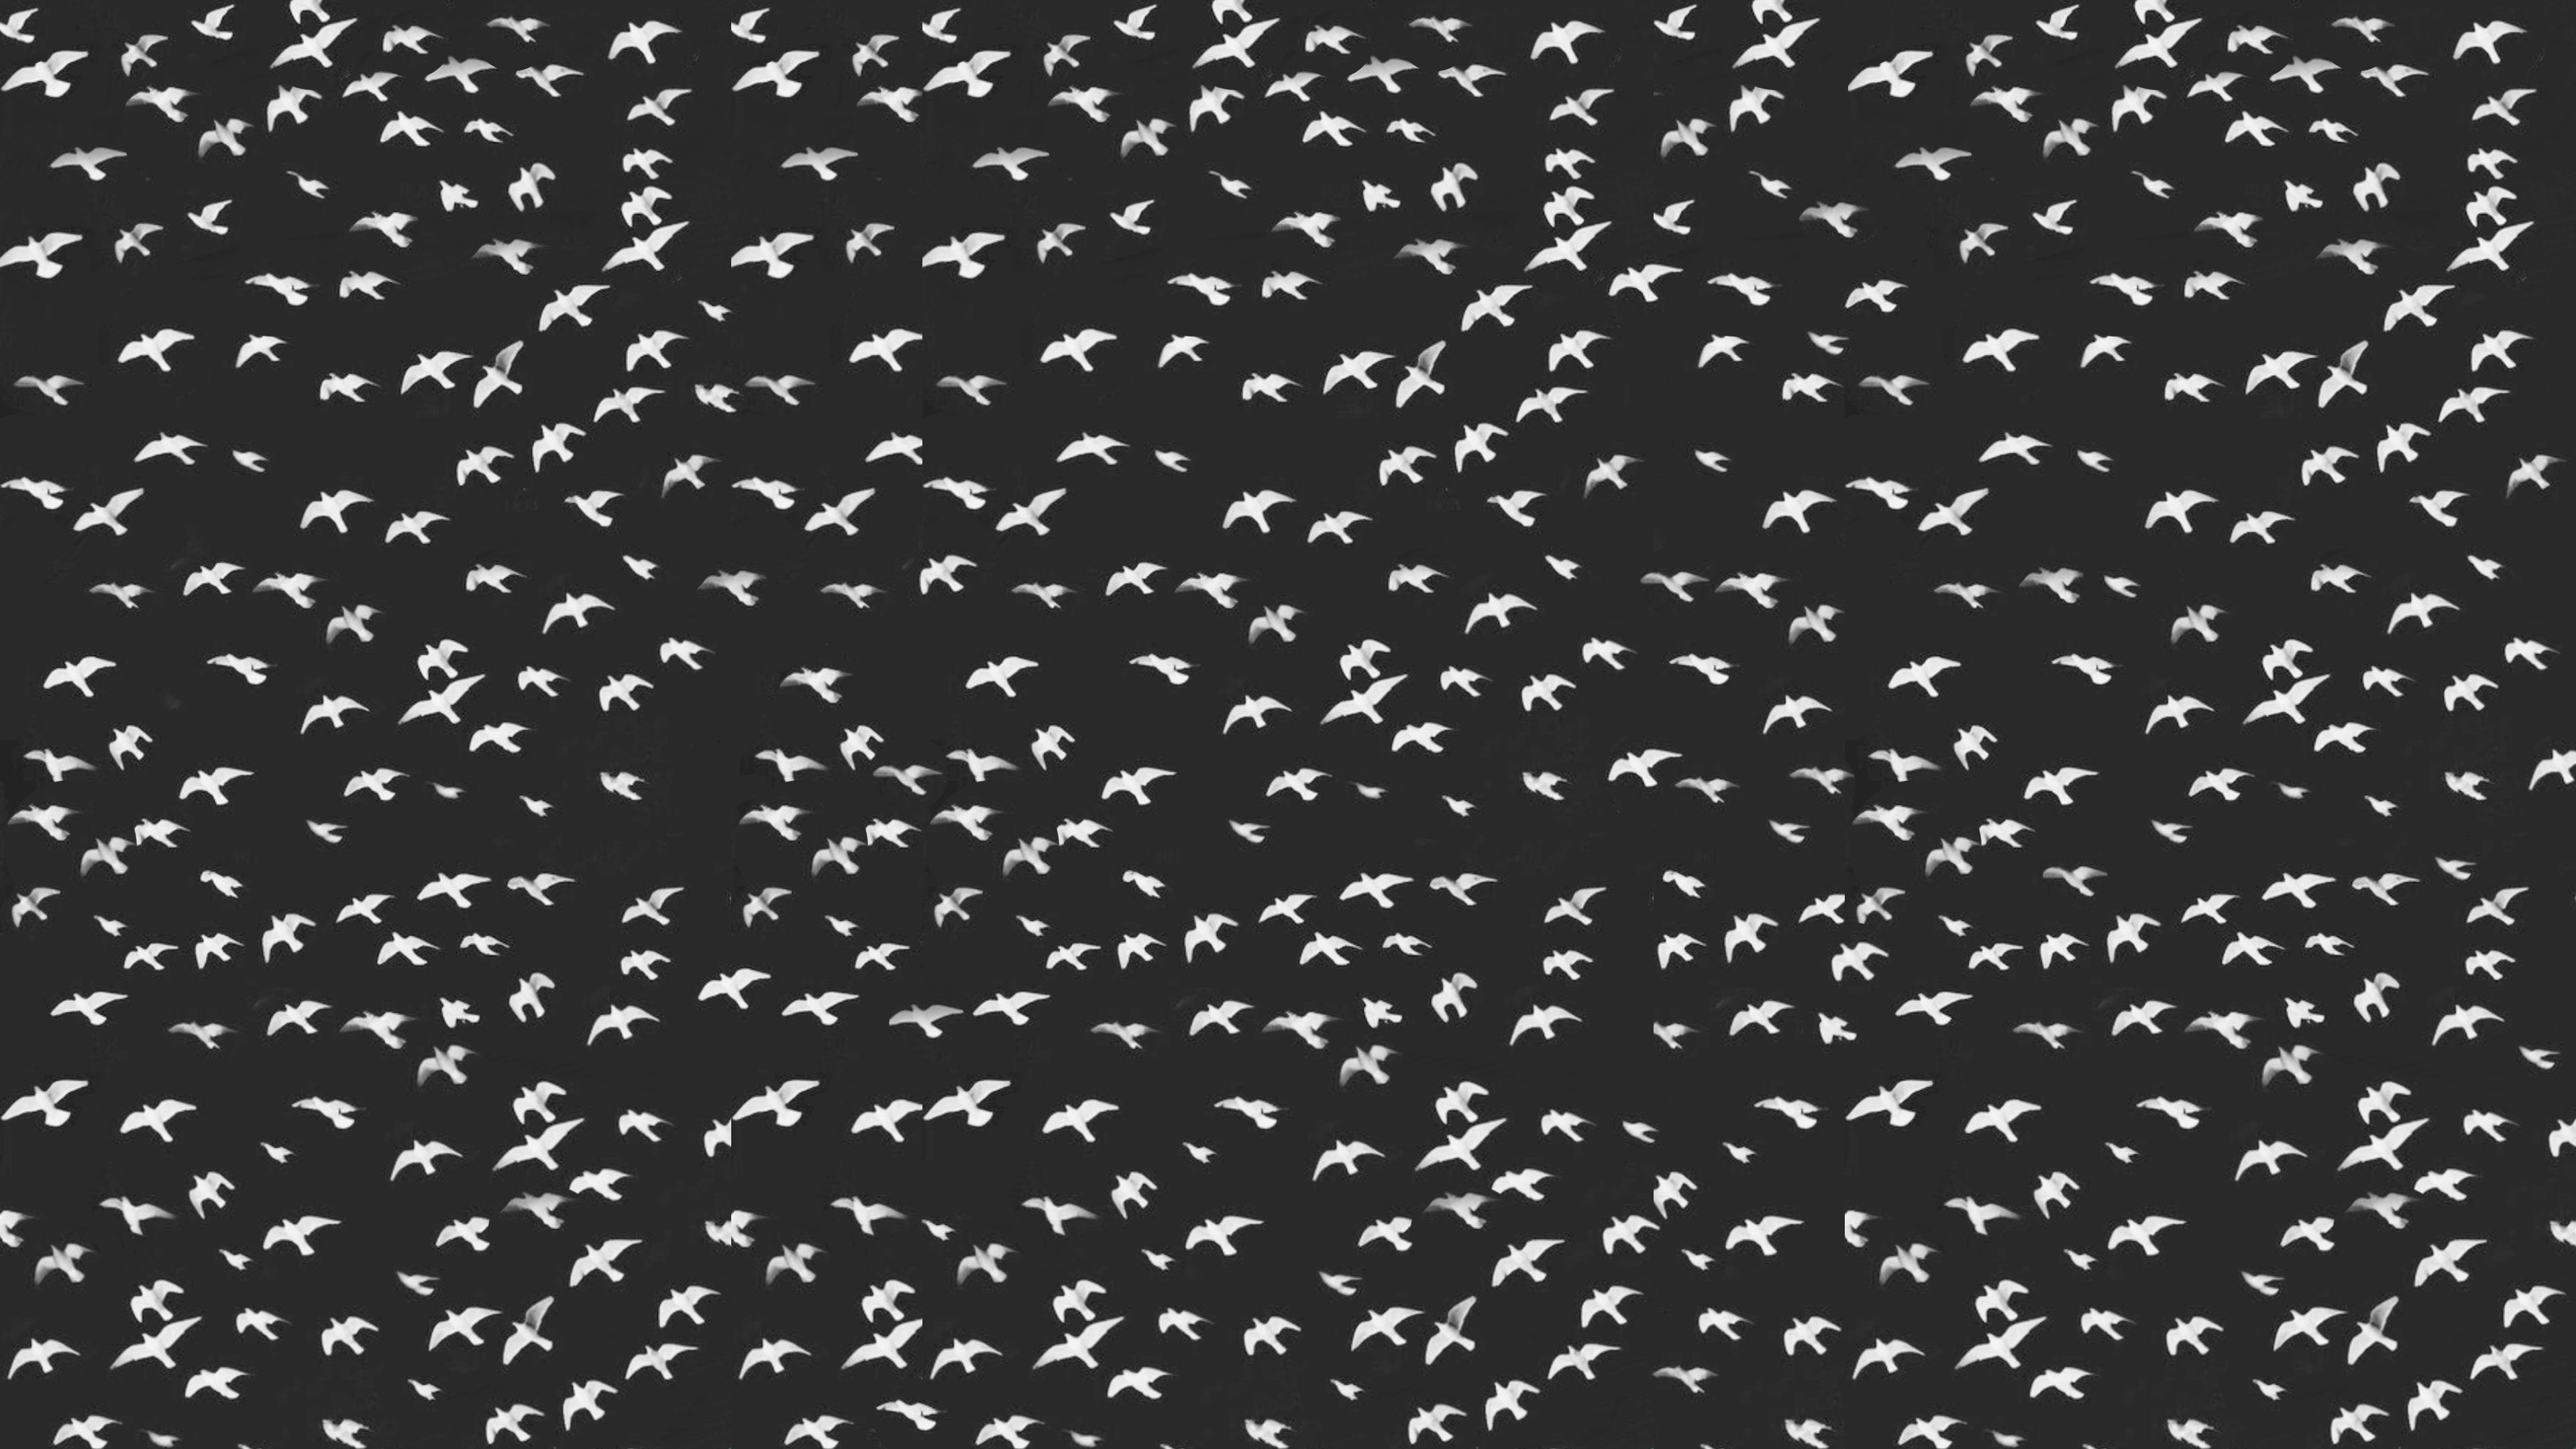 Flock of Birds (3840x2160)